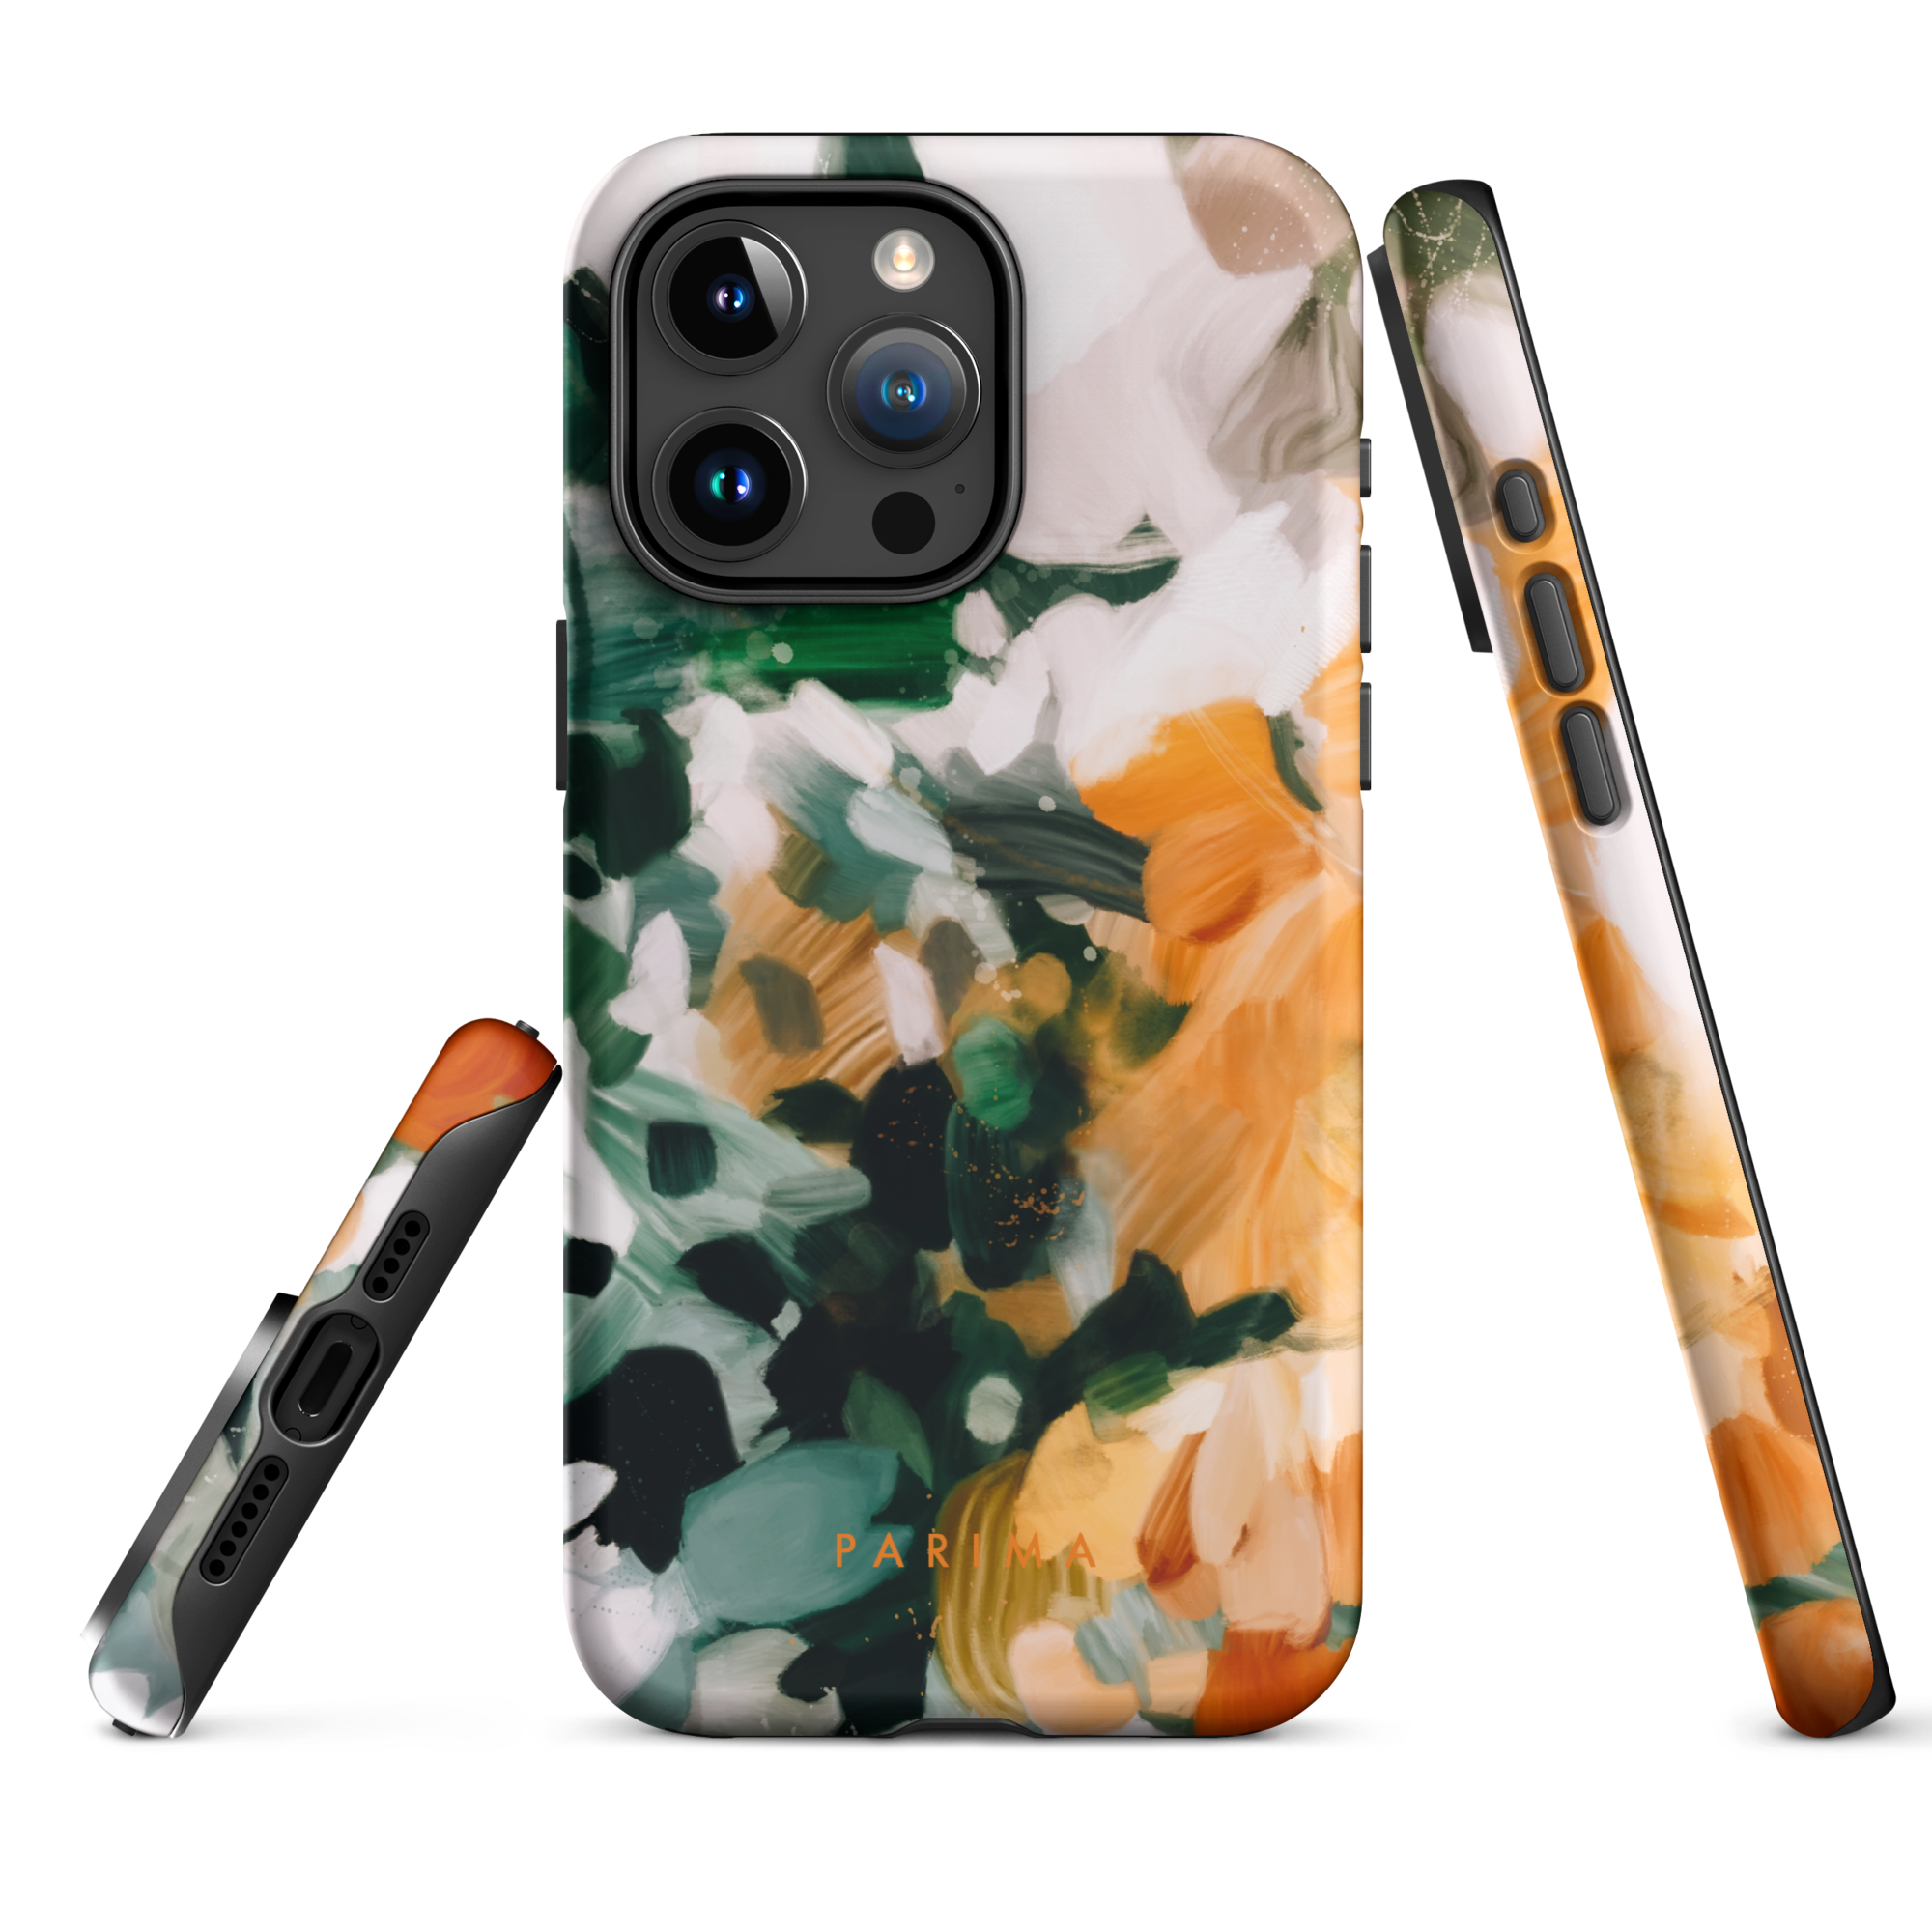 Aspen, green and orange abstract art - iPhone 15 Pro Max tough case by Parima Studio